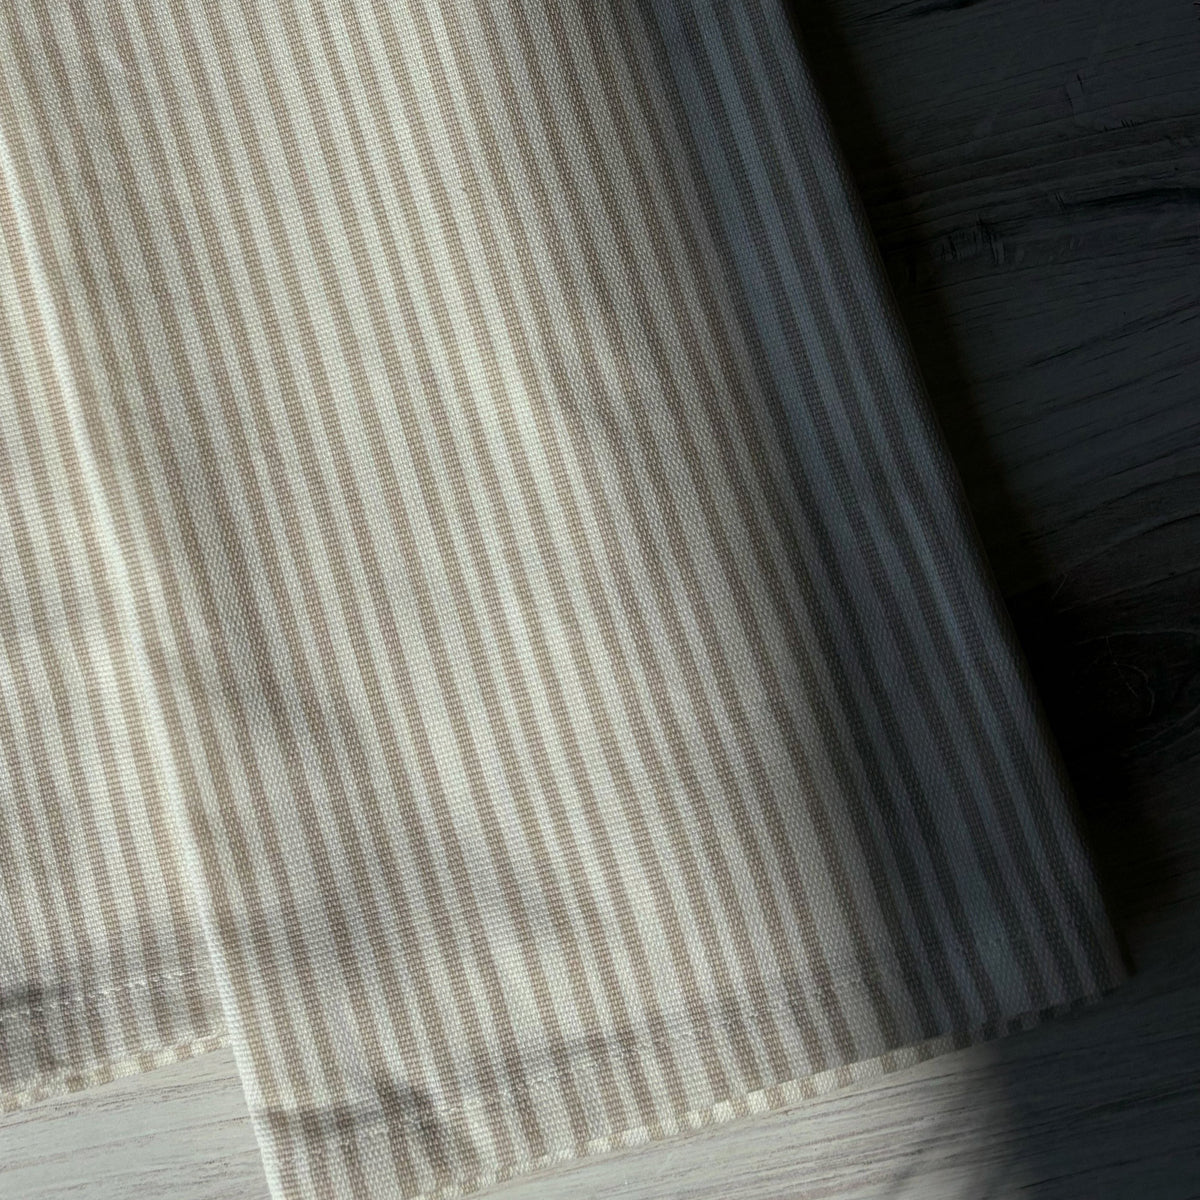 Tan Striped Dish Towel (Set of 2) | Lifestyle Image 2 | Uncommon Lifestyle